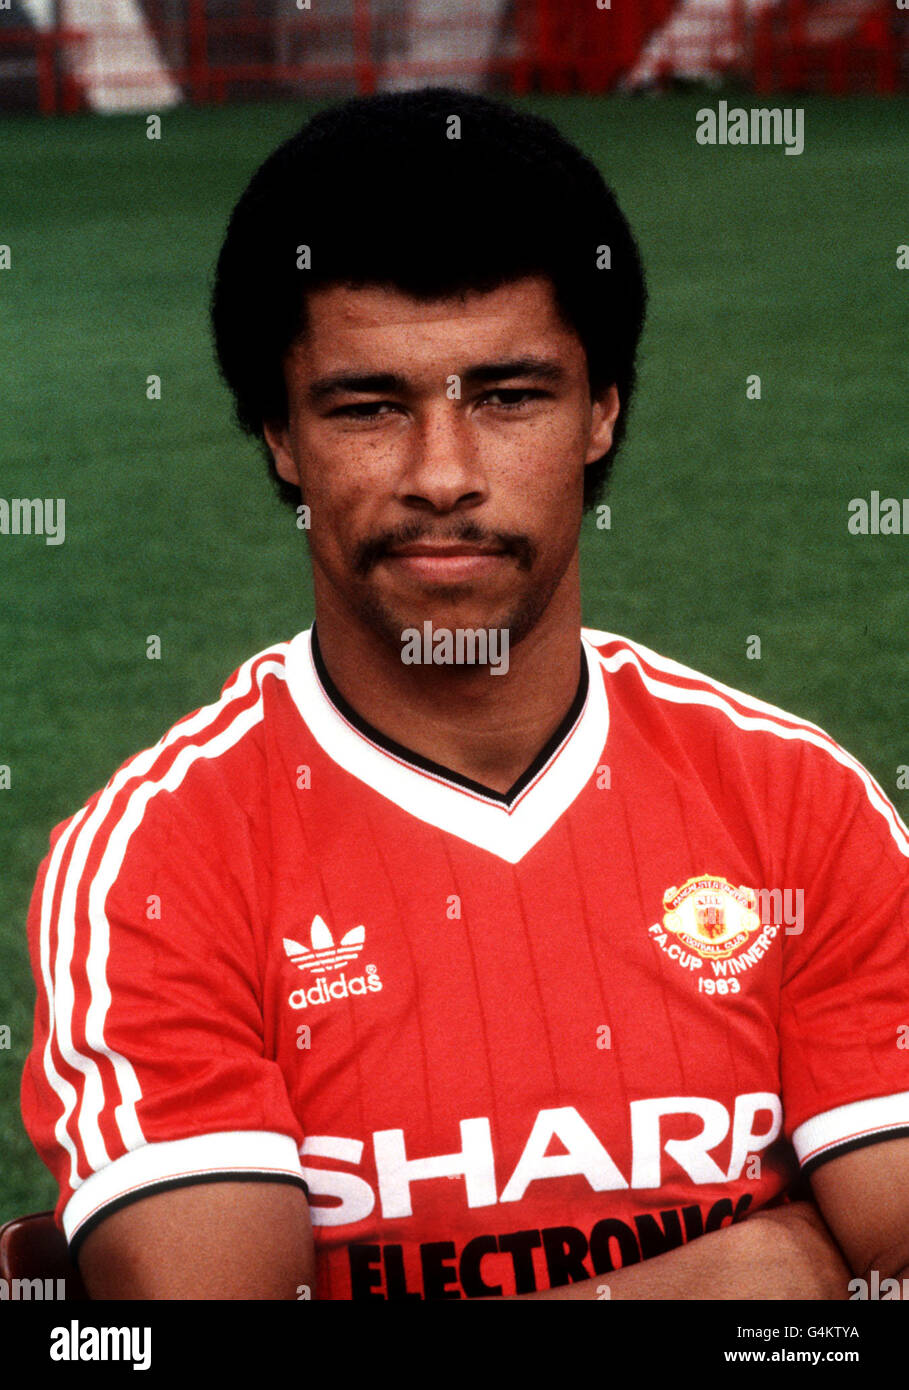 Paul McGrath/Man Utd 1983. Footballer Paul McGrath of Manchester United, 1983. Stock Photo